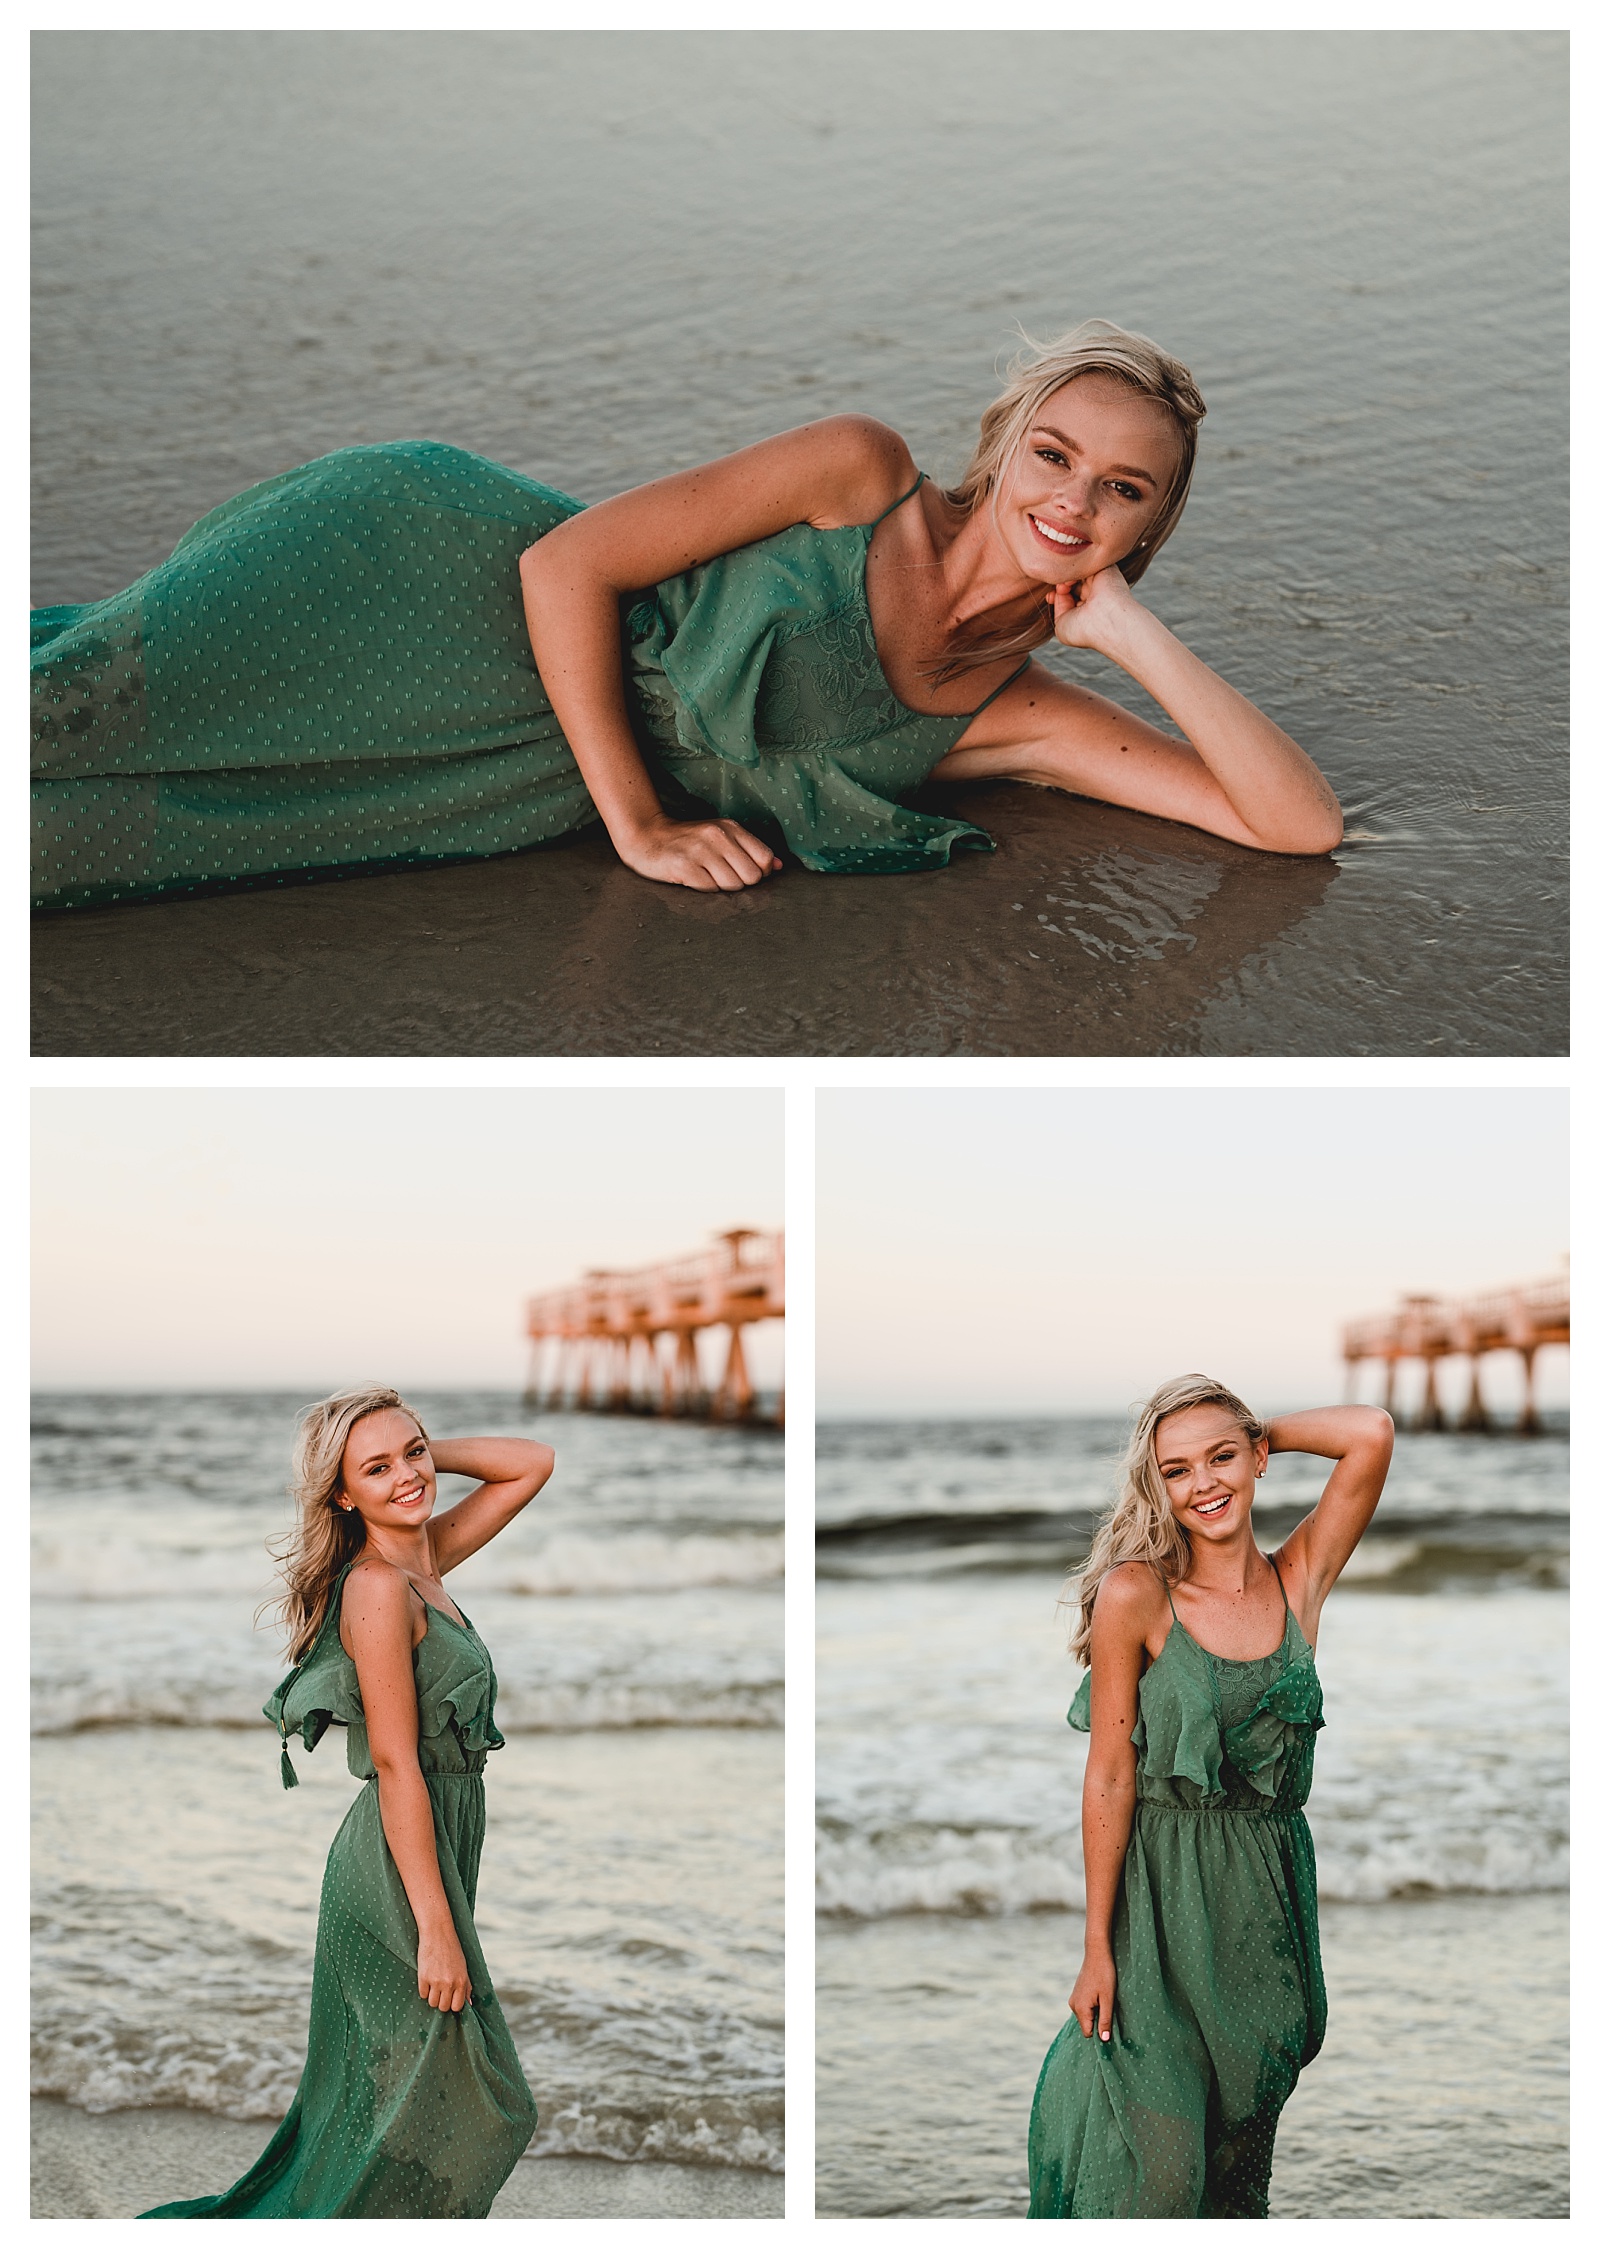 Candid, fun senior photos on Jacksonville beach. Shelly Williams Photography